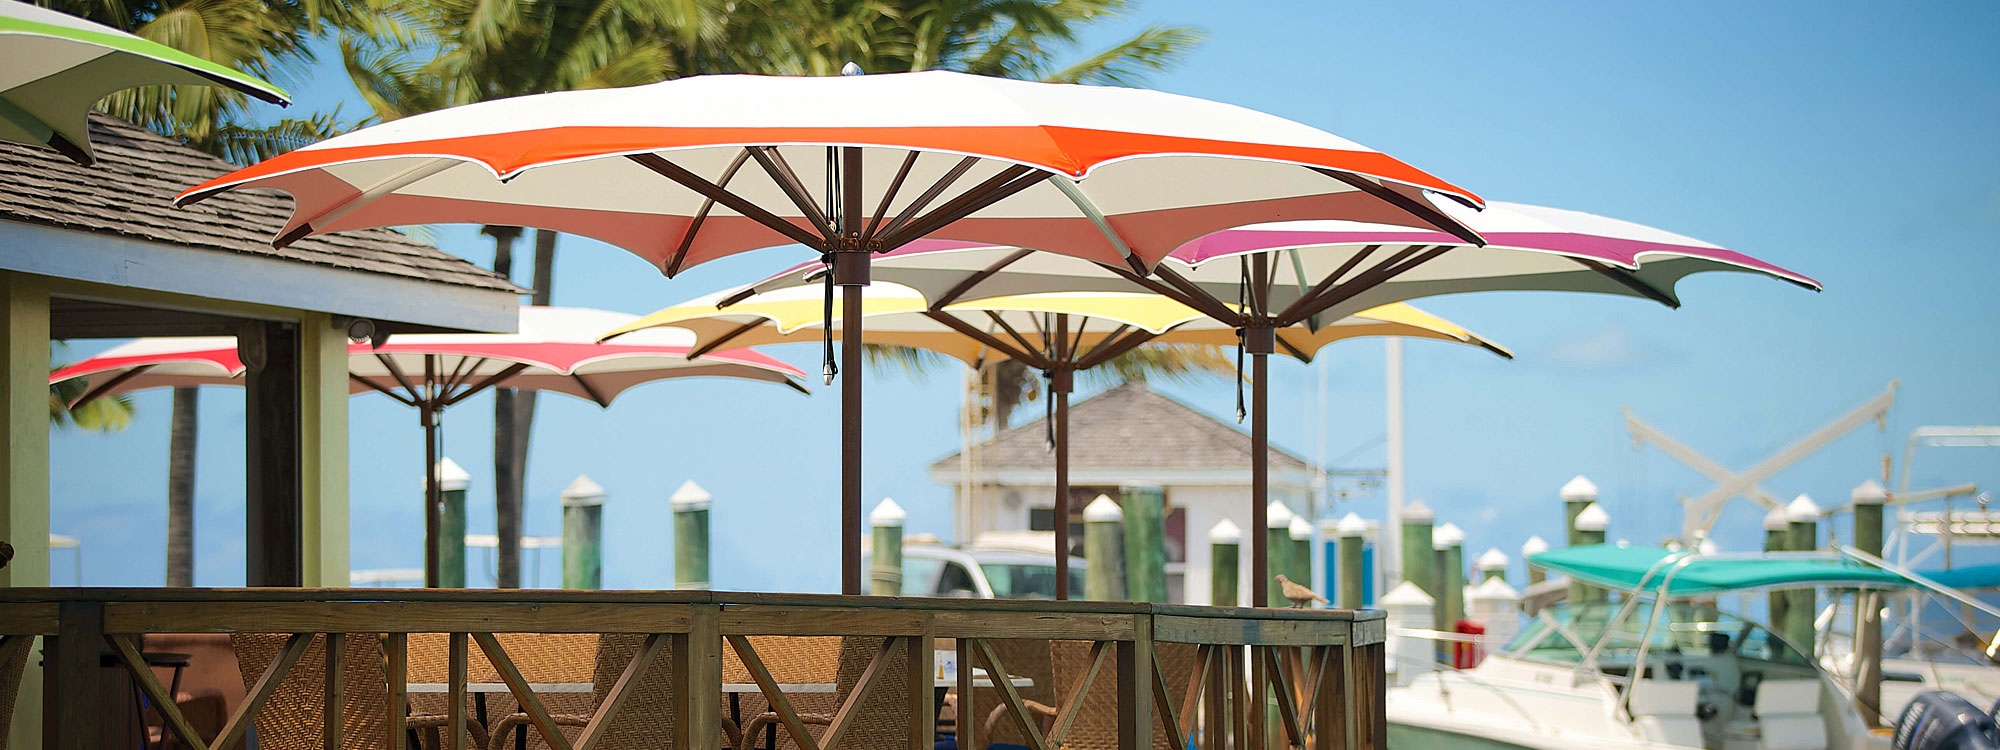 Tuuci Plantation Max centre mast parasols & imitation wood parasols in marine grade parasol materials by Tuuci Modern Parasol Company, Miami.